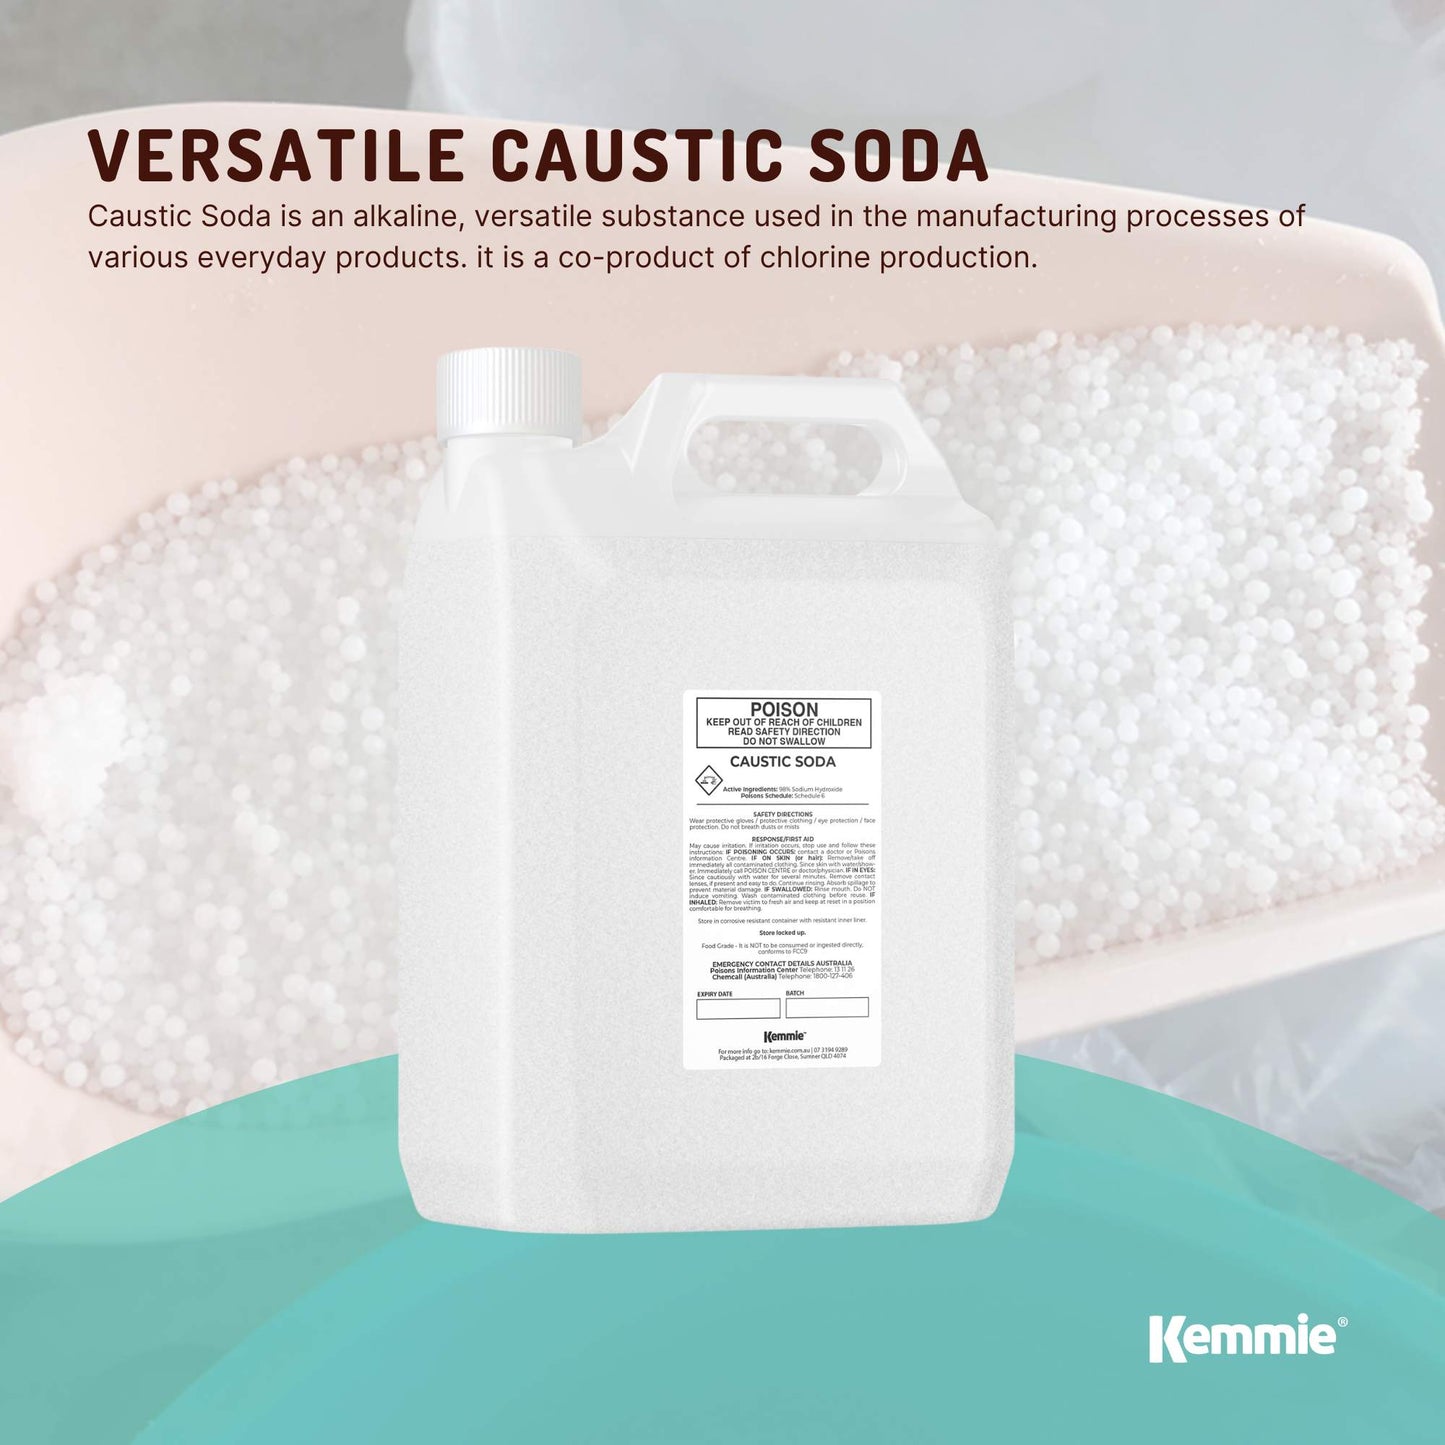 5Kg Caustic Soda Pearls Food Grade Sodium Hydroxide Lye NaOH Soap Making Beads